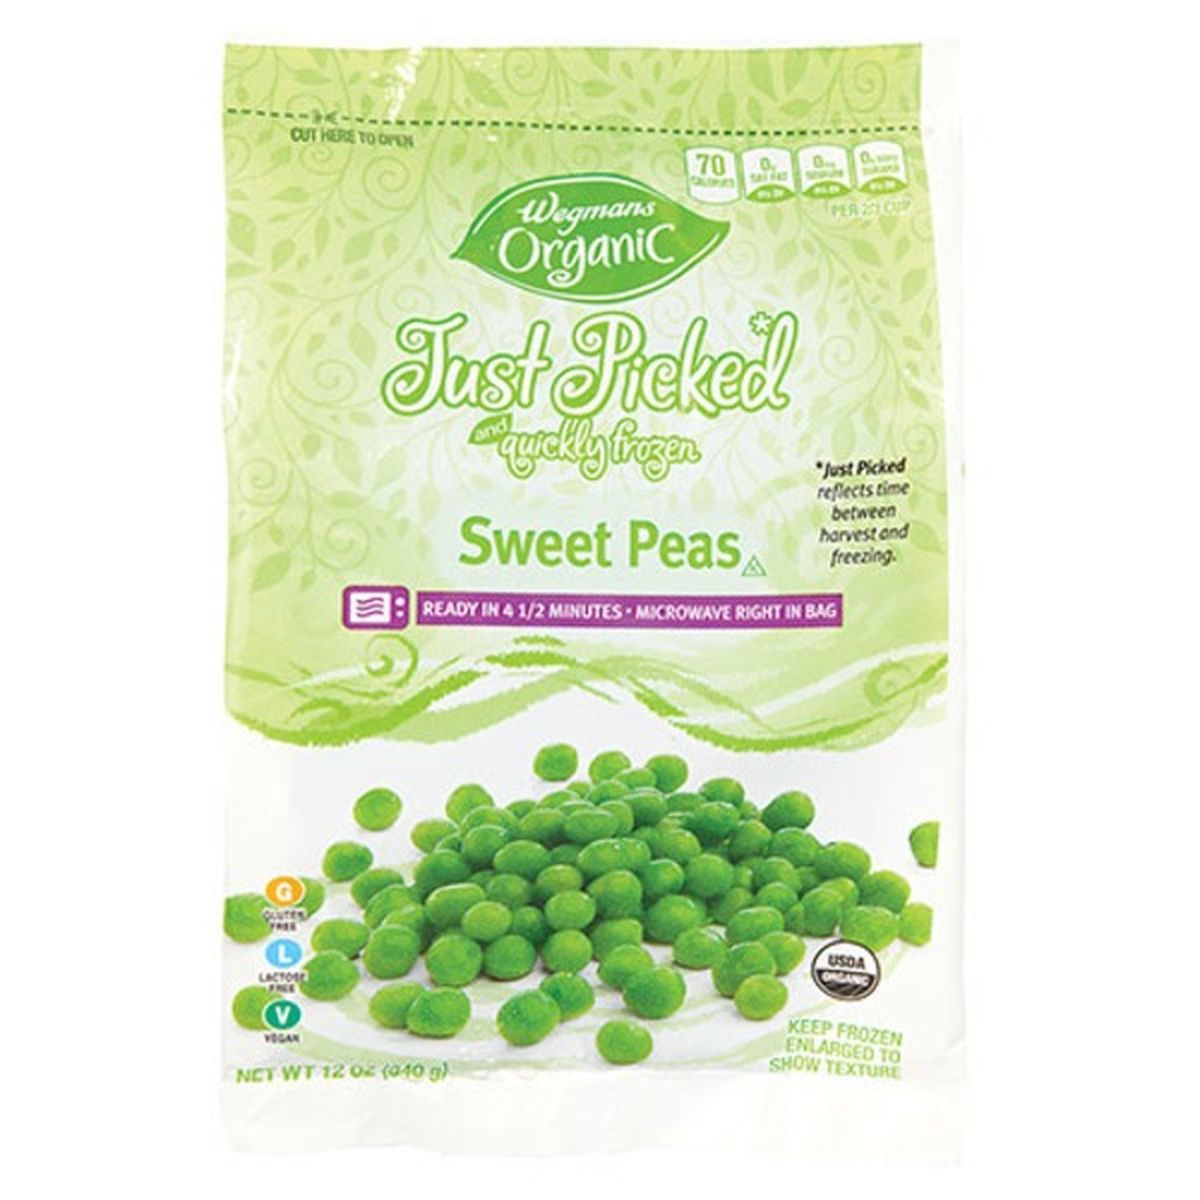 Calories in Wegmans Organic Microwaveable Sweet Peas